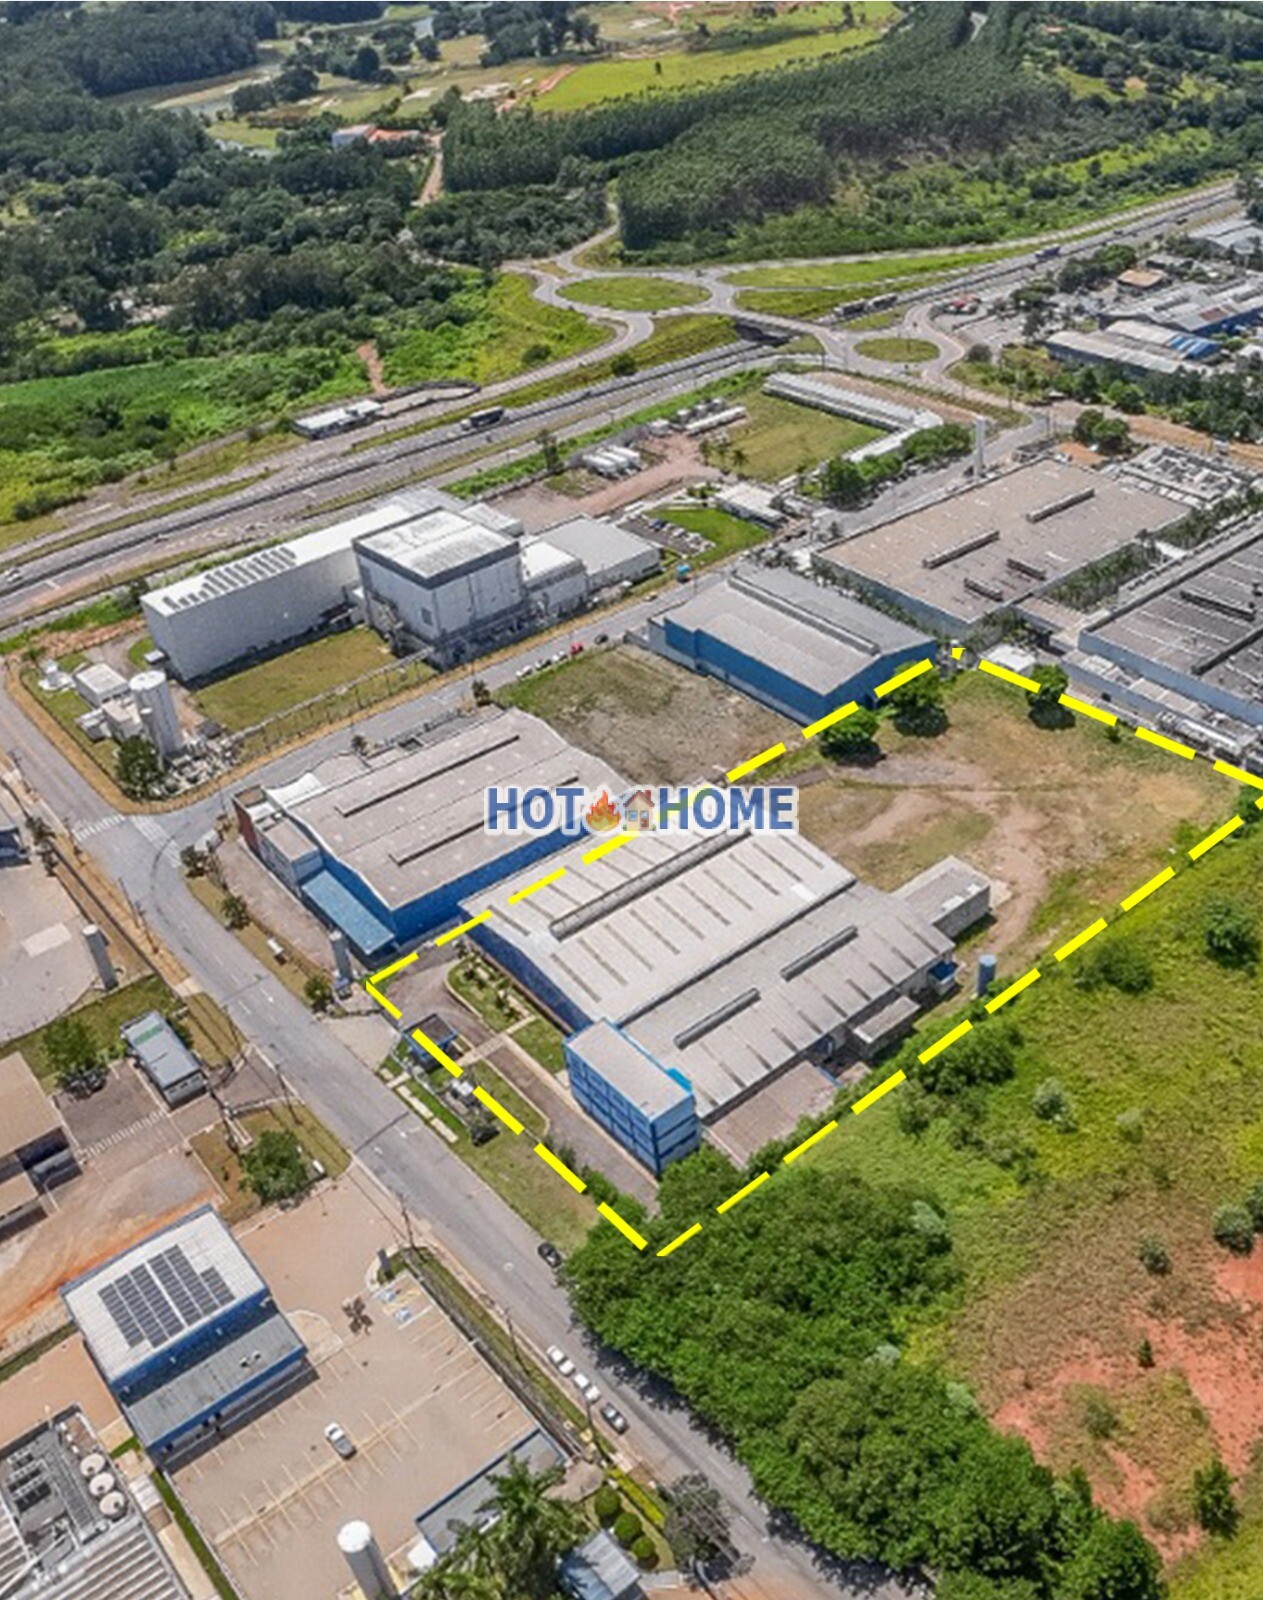 Galpão Industrial 3500m² área coberta. 12mil m² terreno 280m² área administrativa